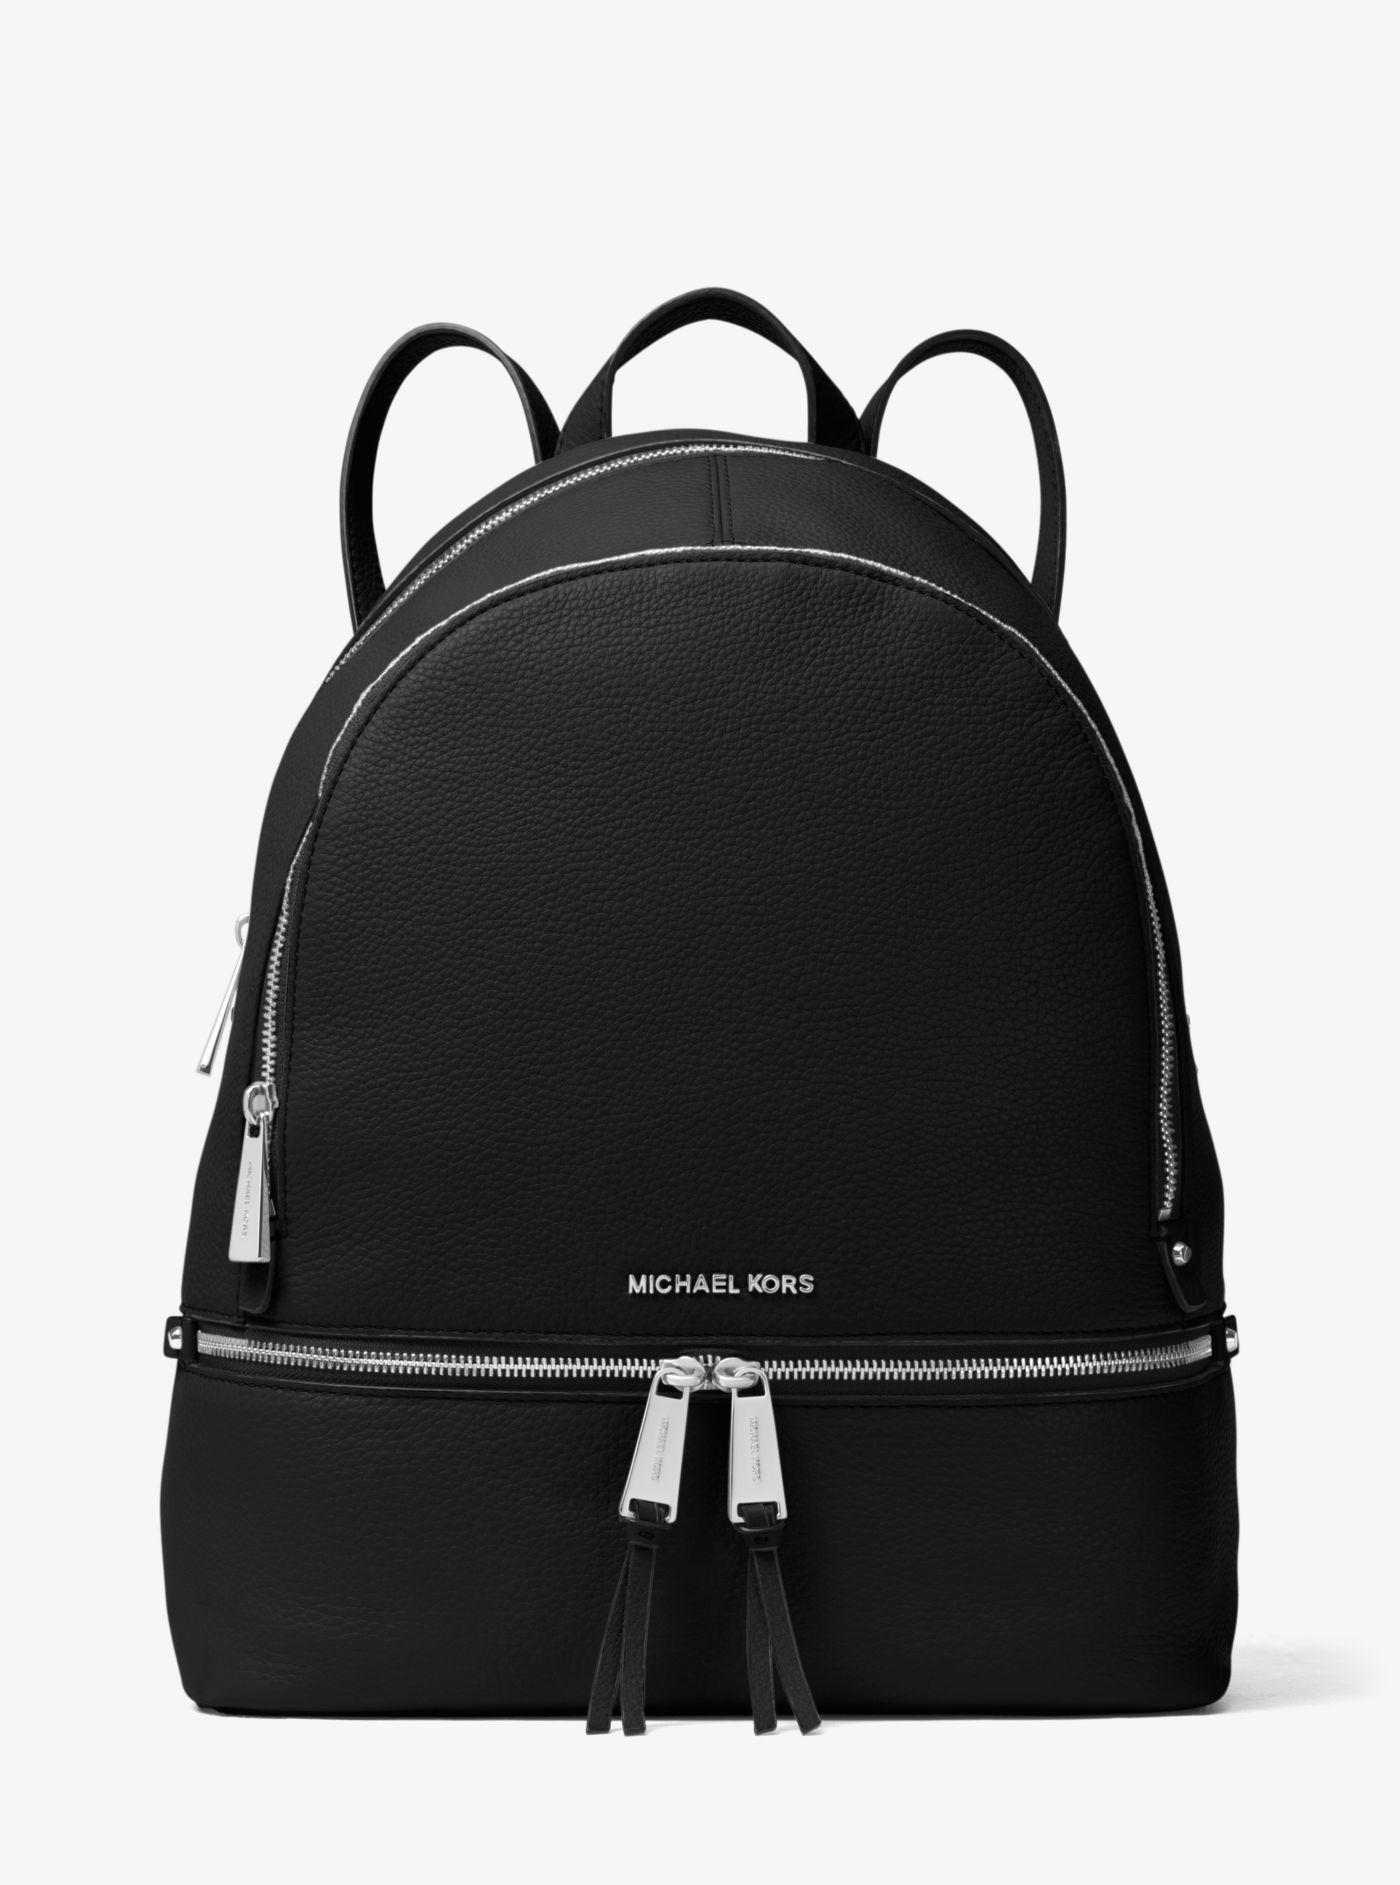 Lyst - Michael Kors Rhea Large Leather Backpack in Black